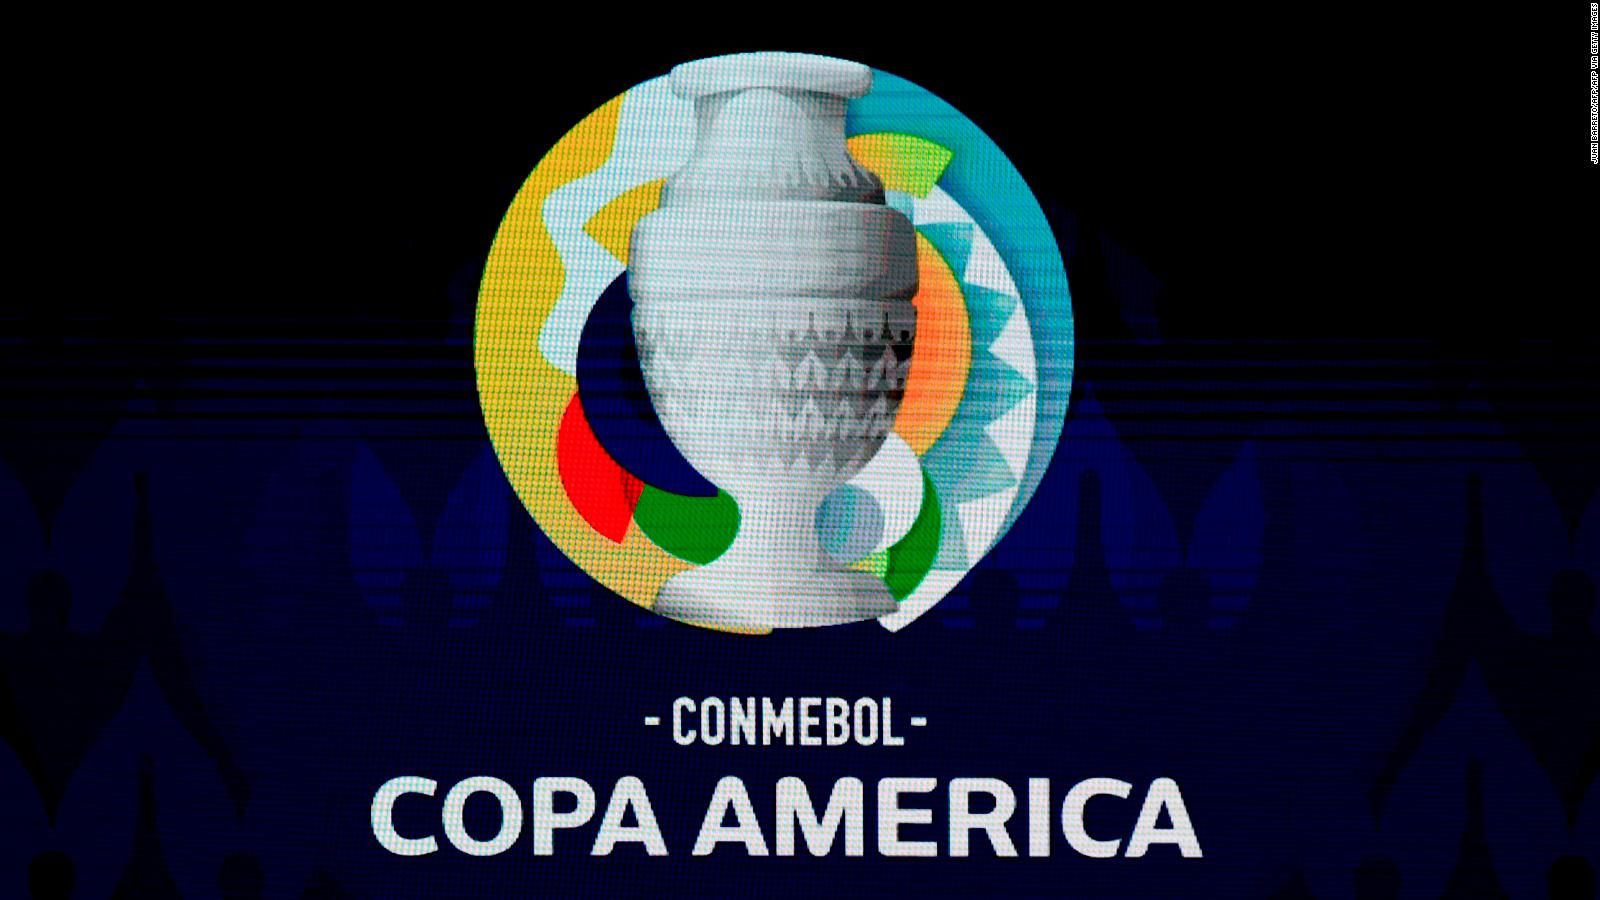 Konmebol said that the 2021 Copa America will be held in Brazil